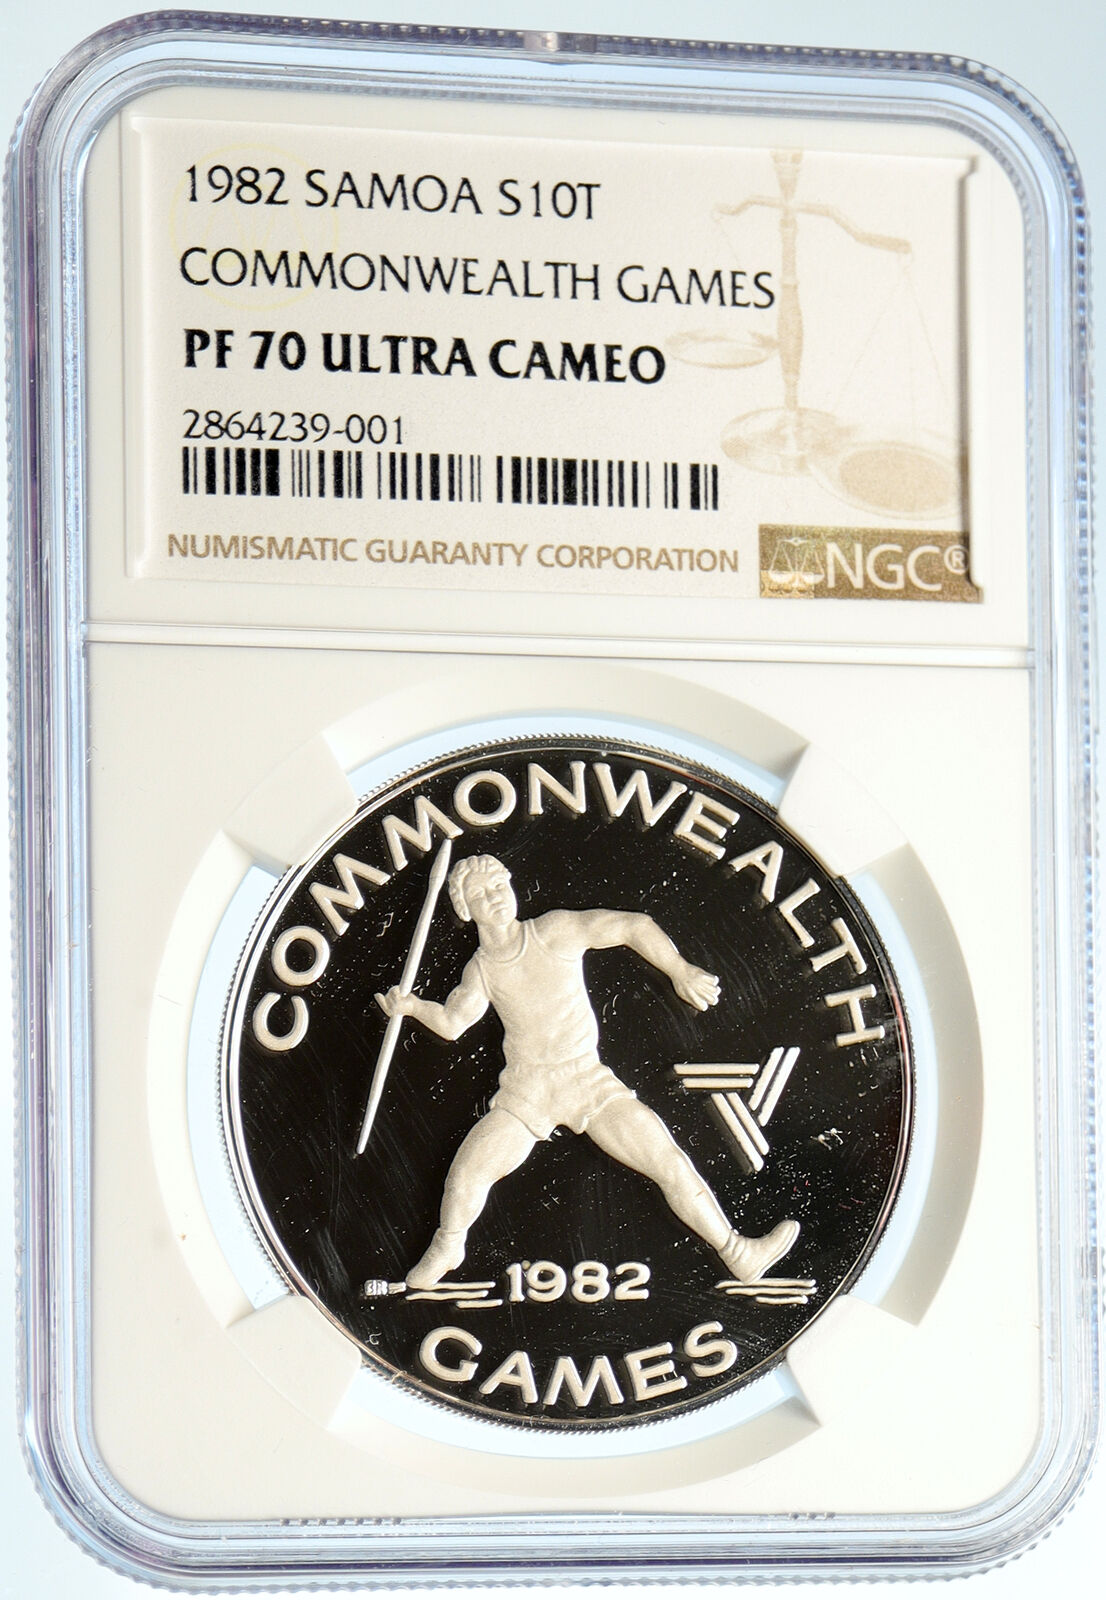 1982 SAMOA UK British COMMONWEALTH GAMES Proof Silver $10 Tala Coin NGC i99951